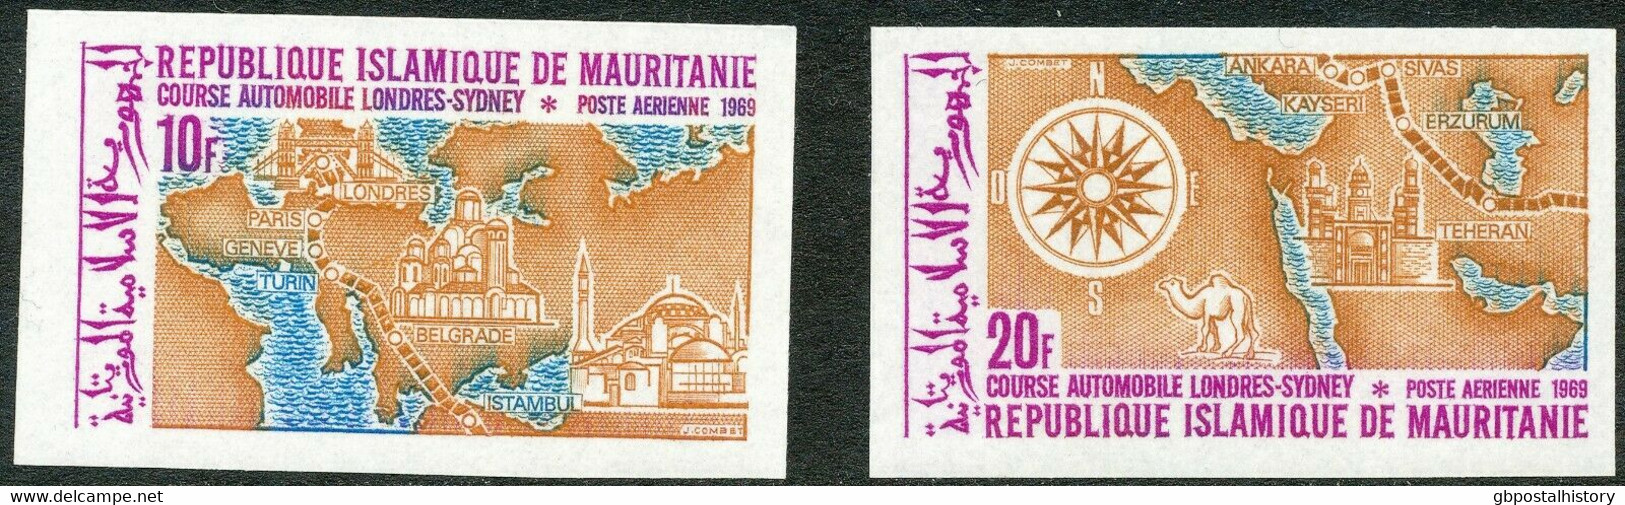 MAURETANIEN 1969 Transkontinentale Autorallye London-Sydney U/M Set IMPERFORATED - Mauretanien (1960-...)